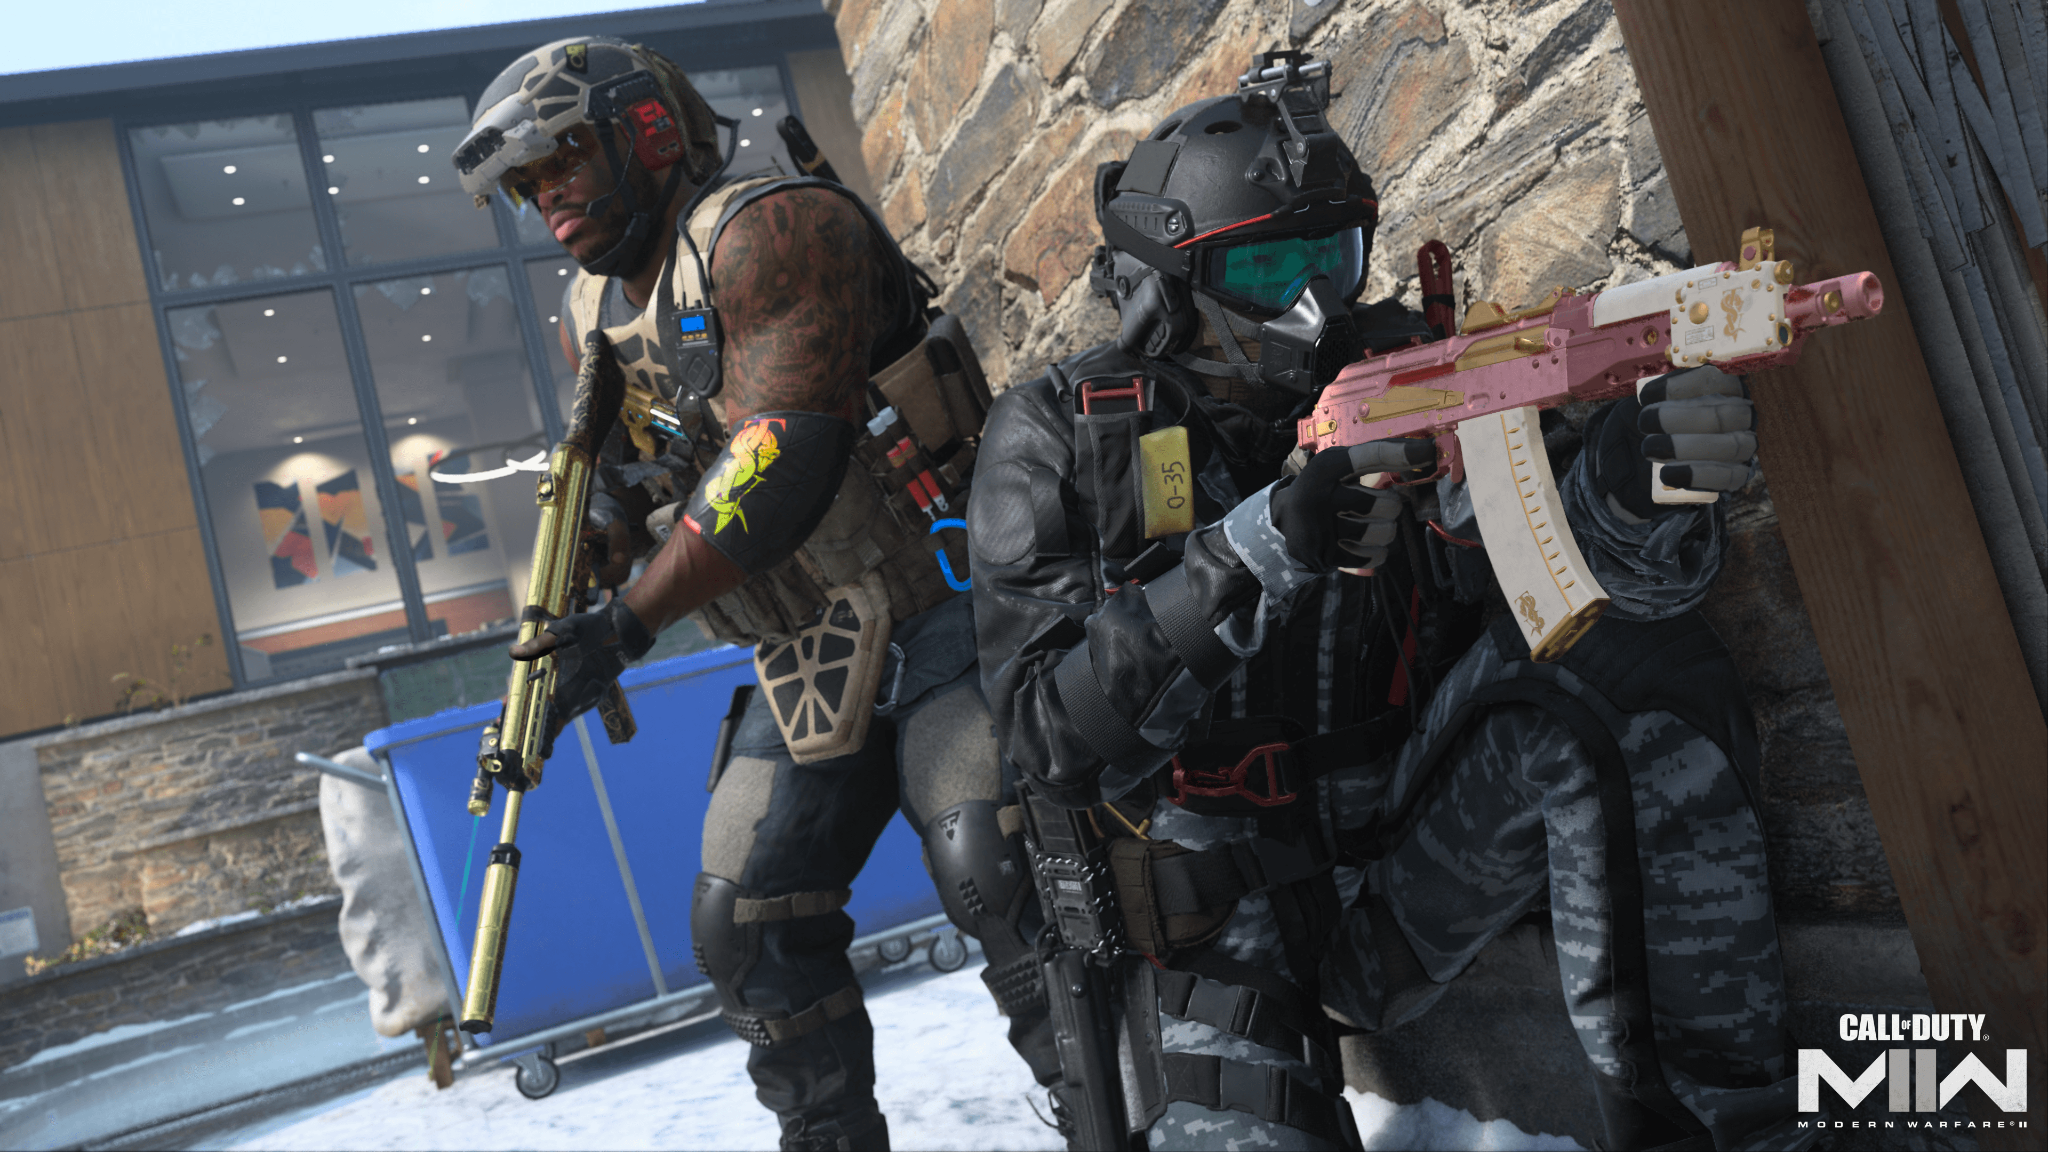 Modern Warfare 3 reveal event teased for Warzone Season 5